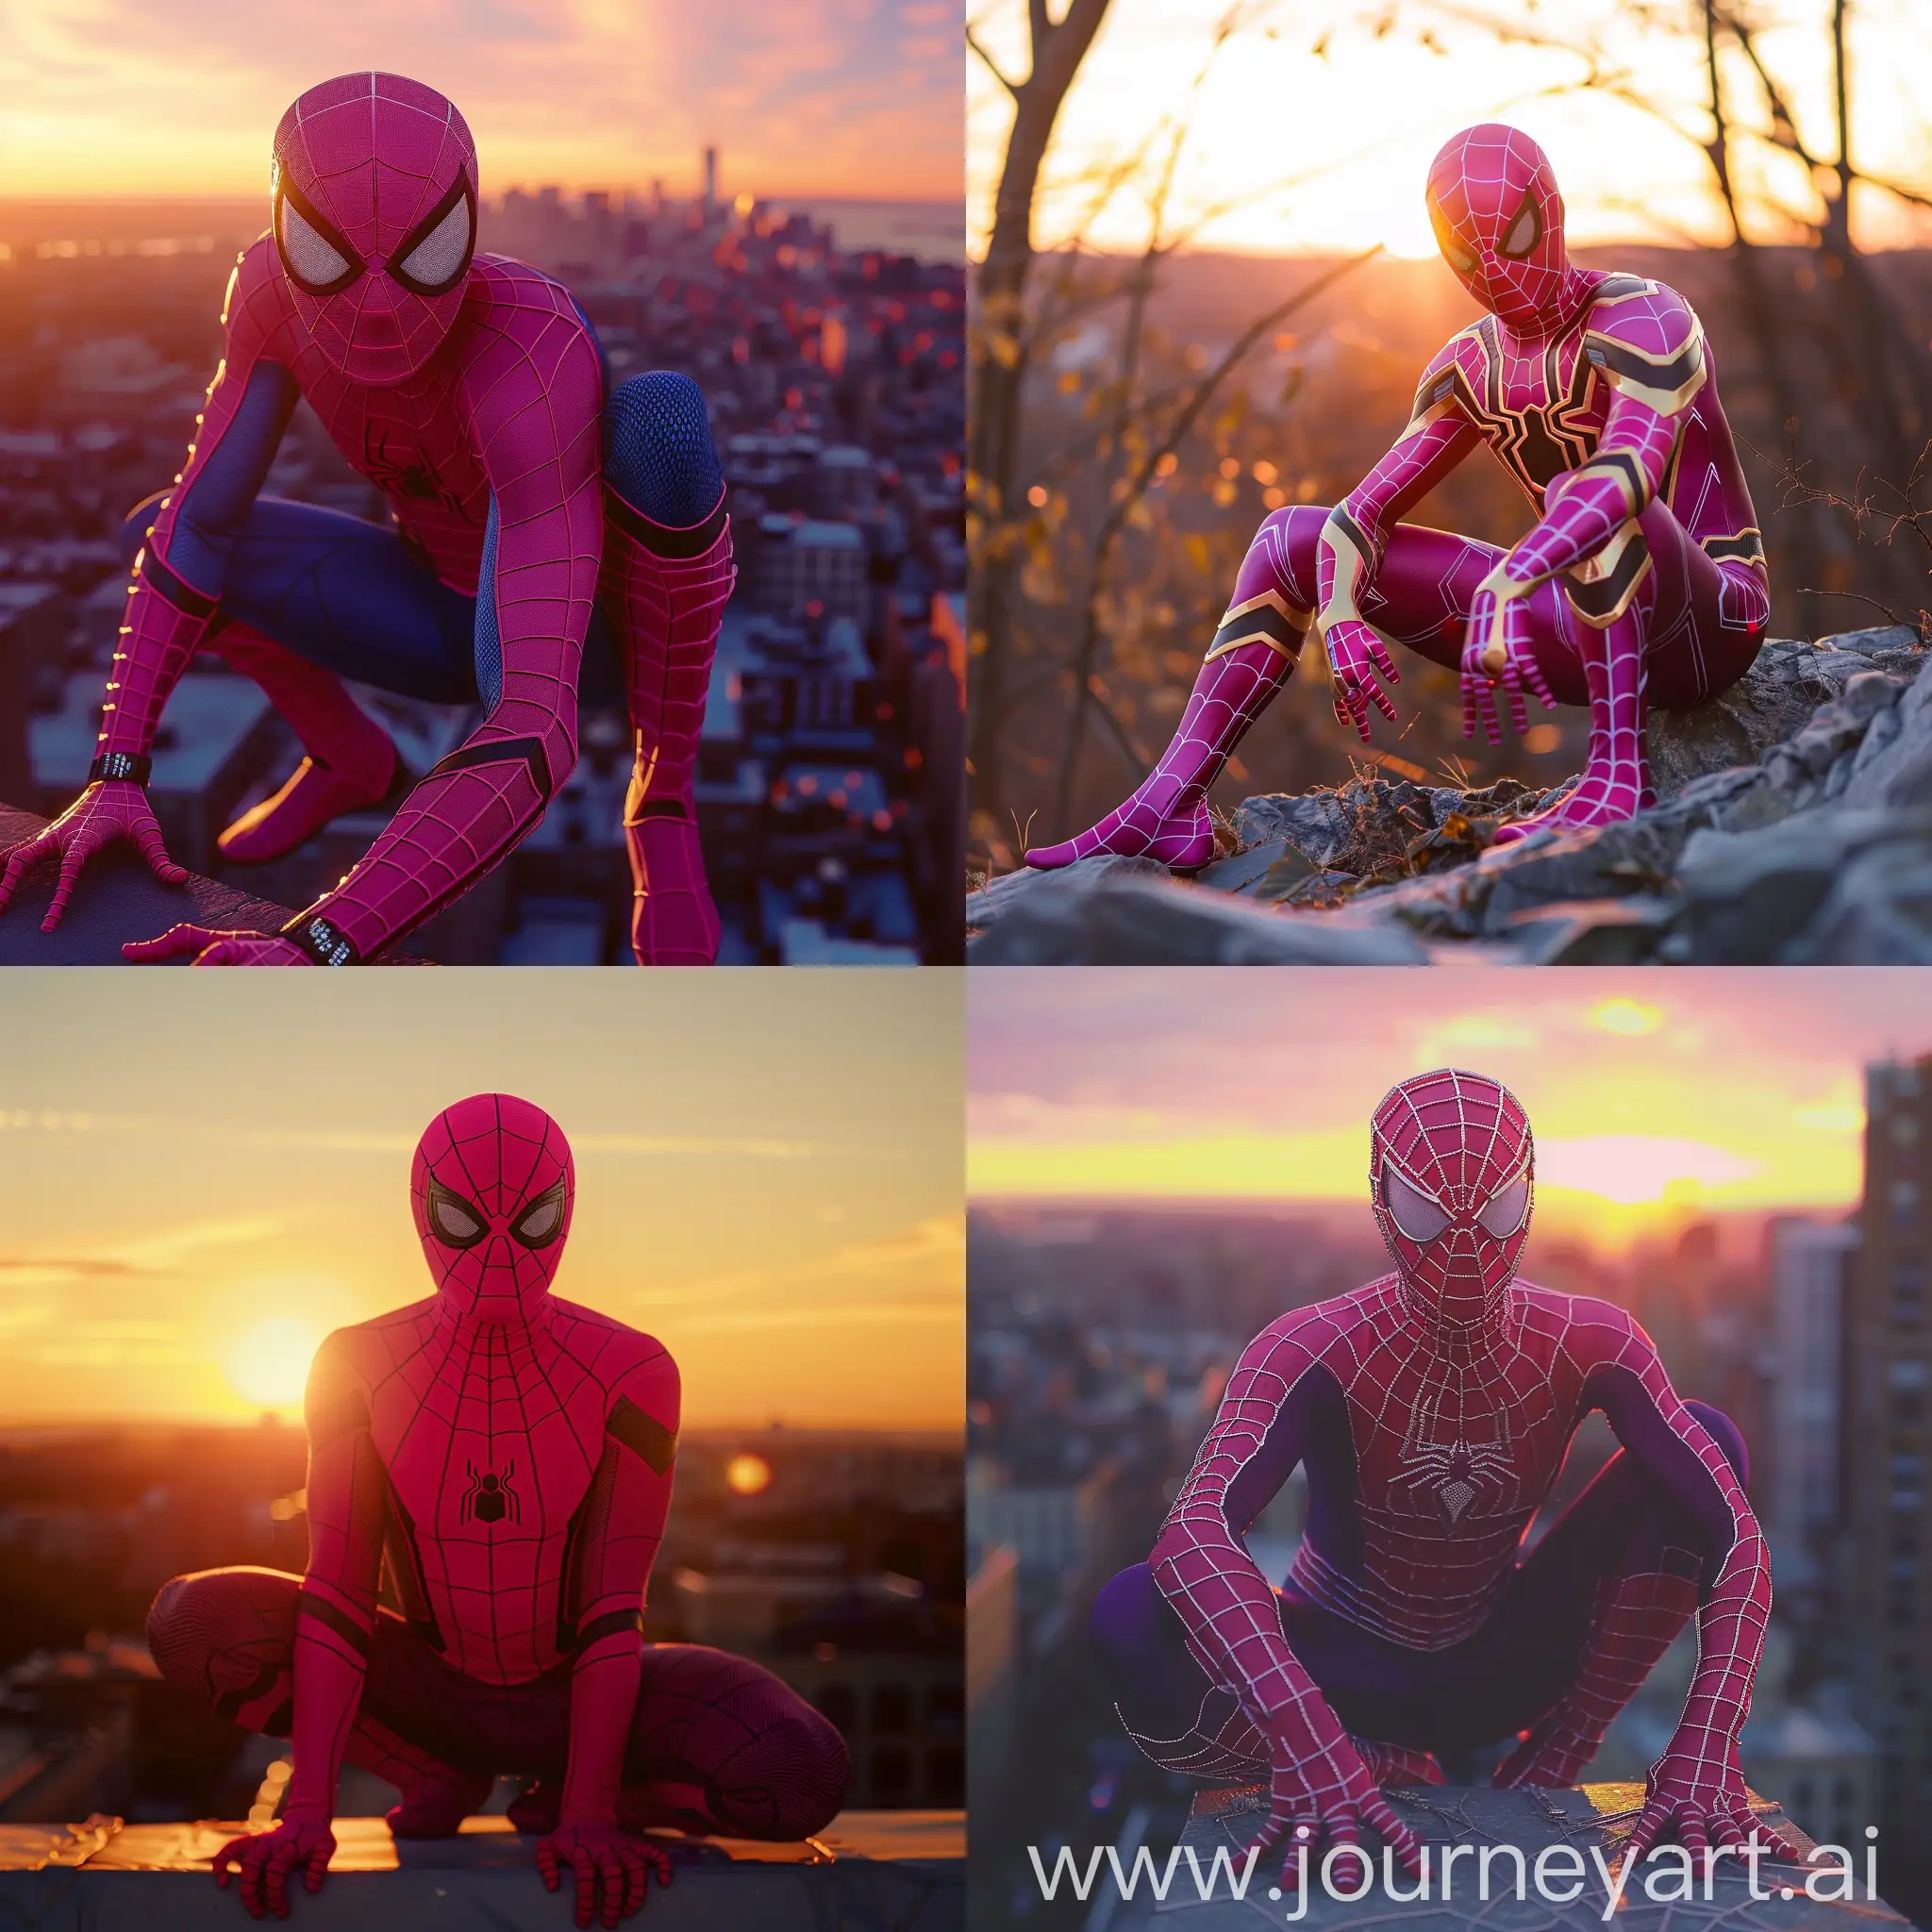 pink spiderman at sunset

